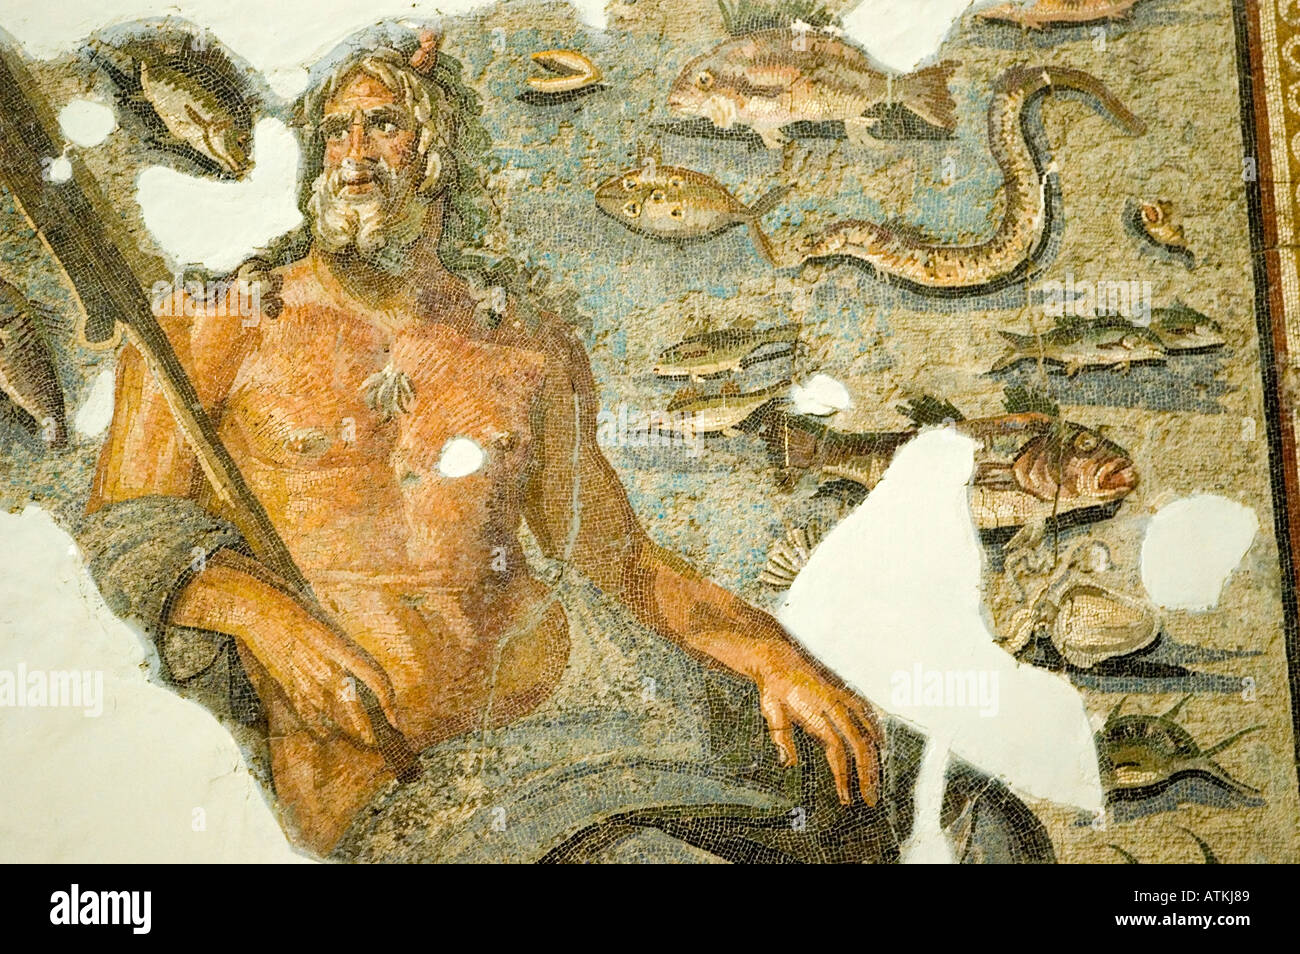 Oceanus, son of Uranus, mosaic from 2nd second century AD, Hatay Museum, Antakya, Turkey, Middle East. DSC 6399 Stock Photo